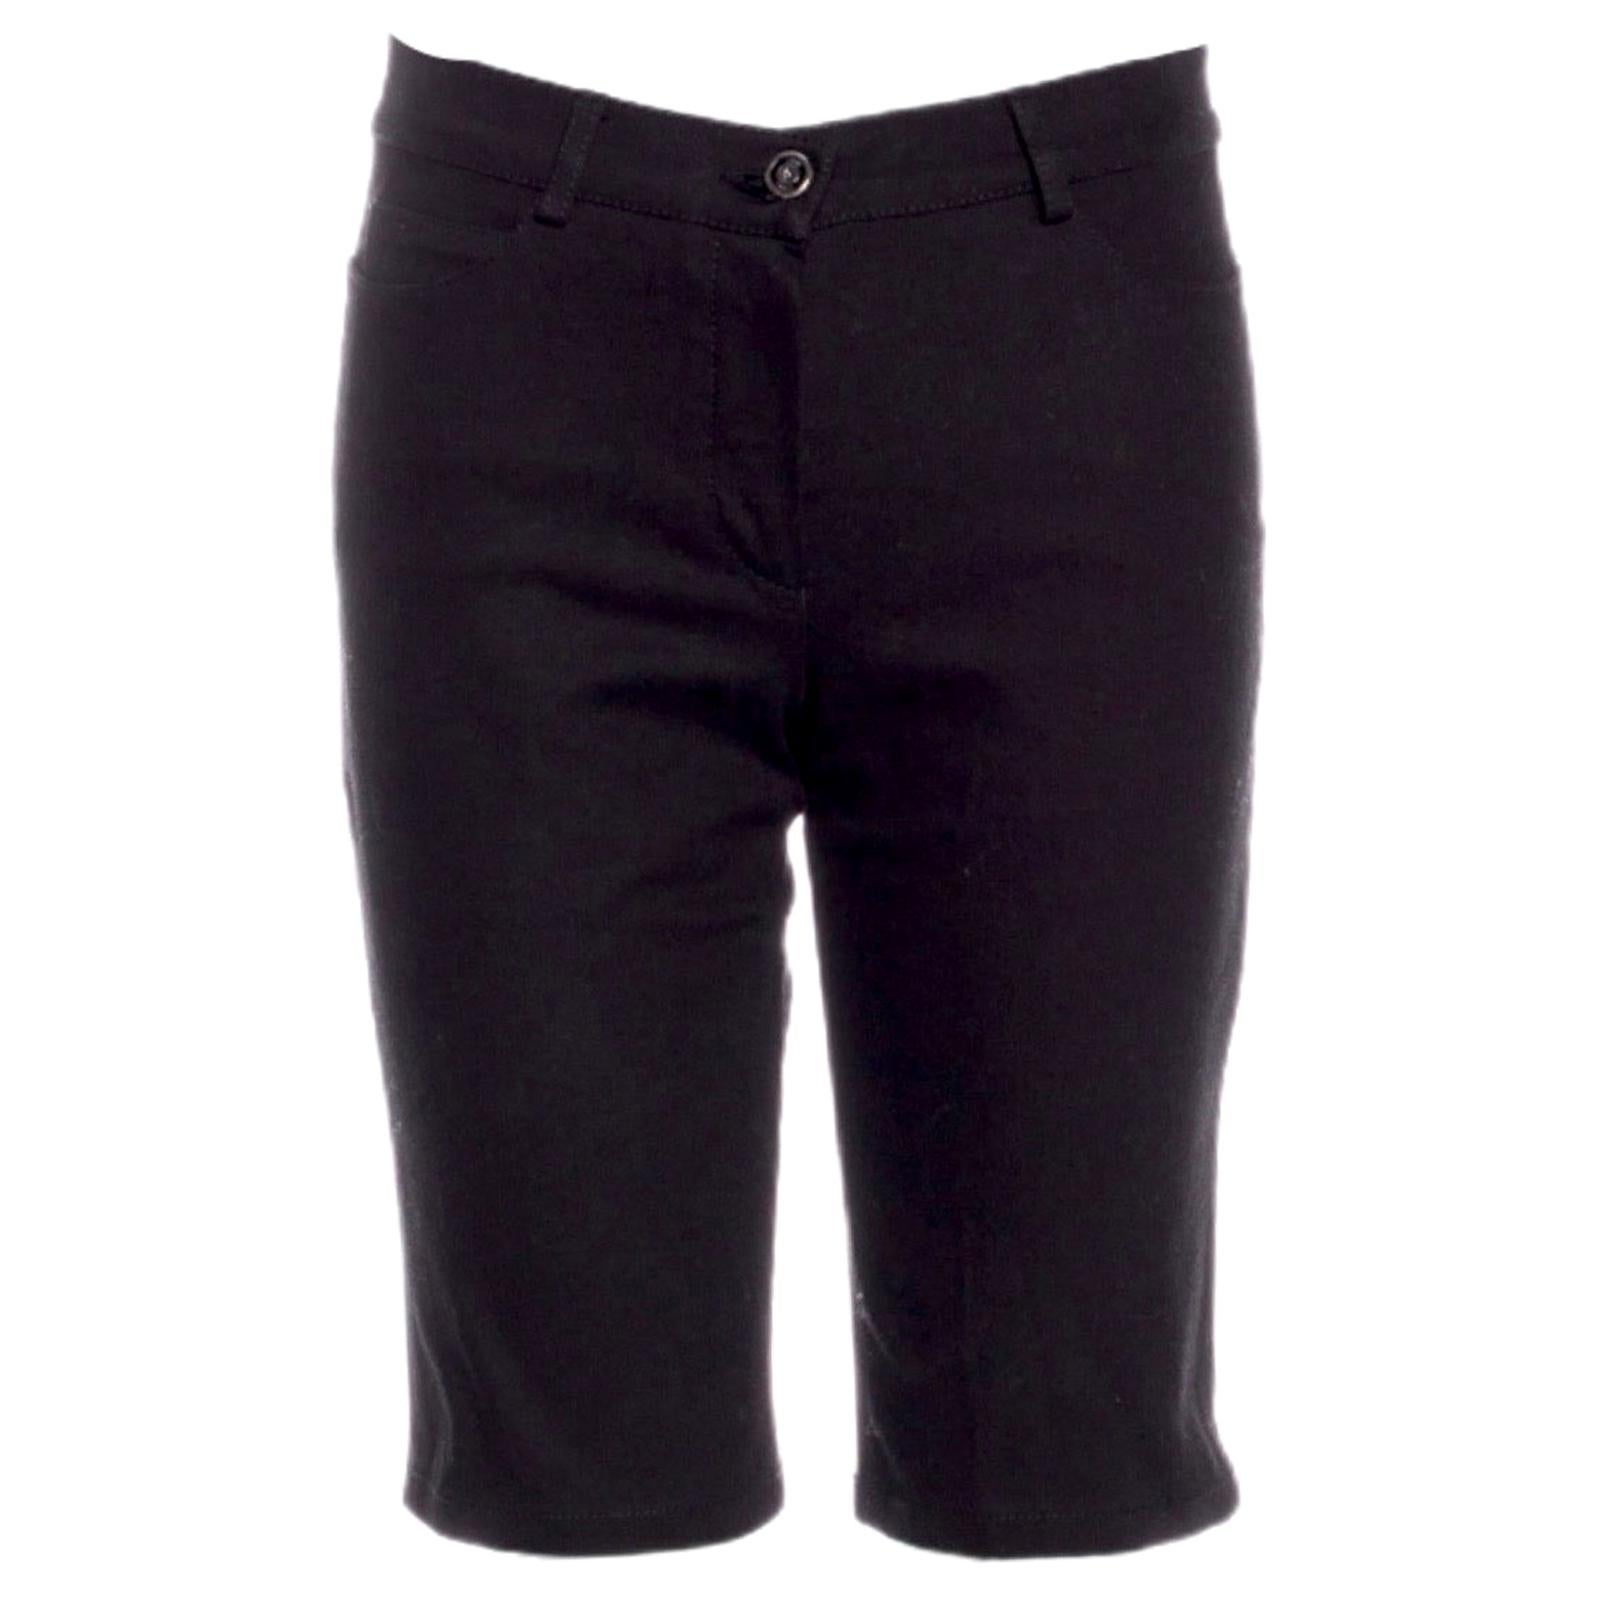 NEW Chanel Black Classic Shorts 5 Pocket Denim Style Pants 34